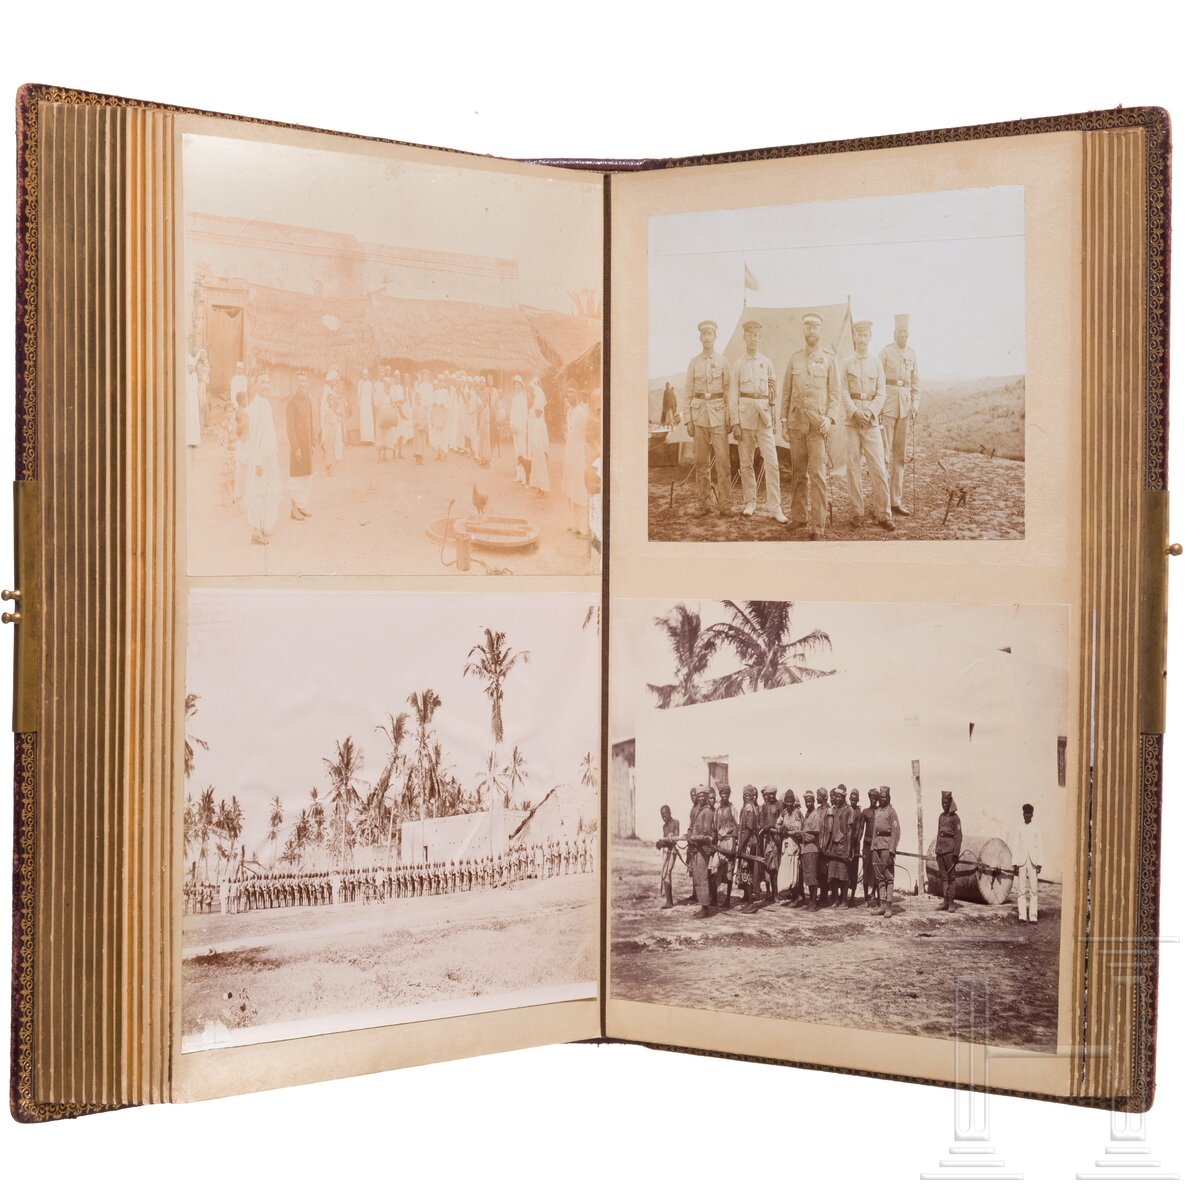 Oberleutnant Kuhlmann - Fotoalbum, Deutsch-Ostafrika, 1890er Jahre - Image 4 of 12